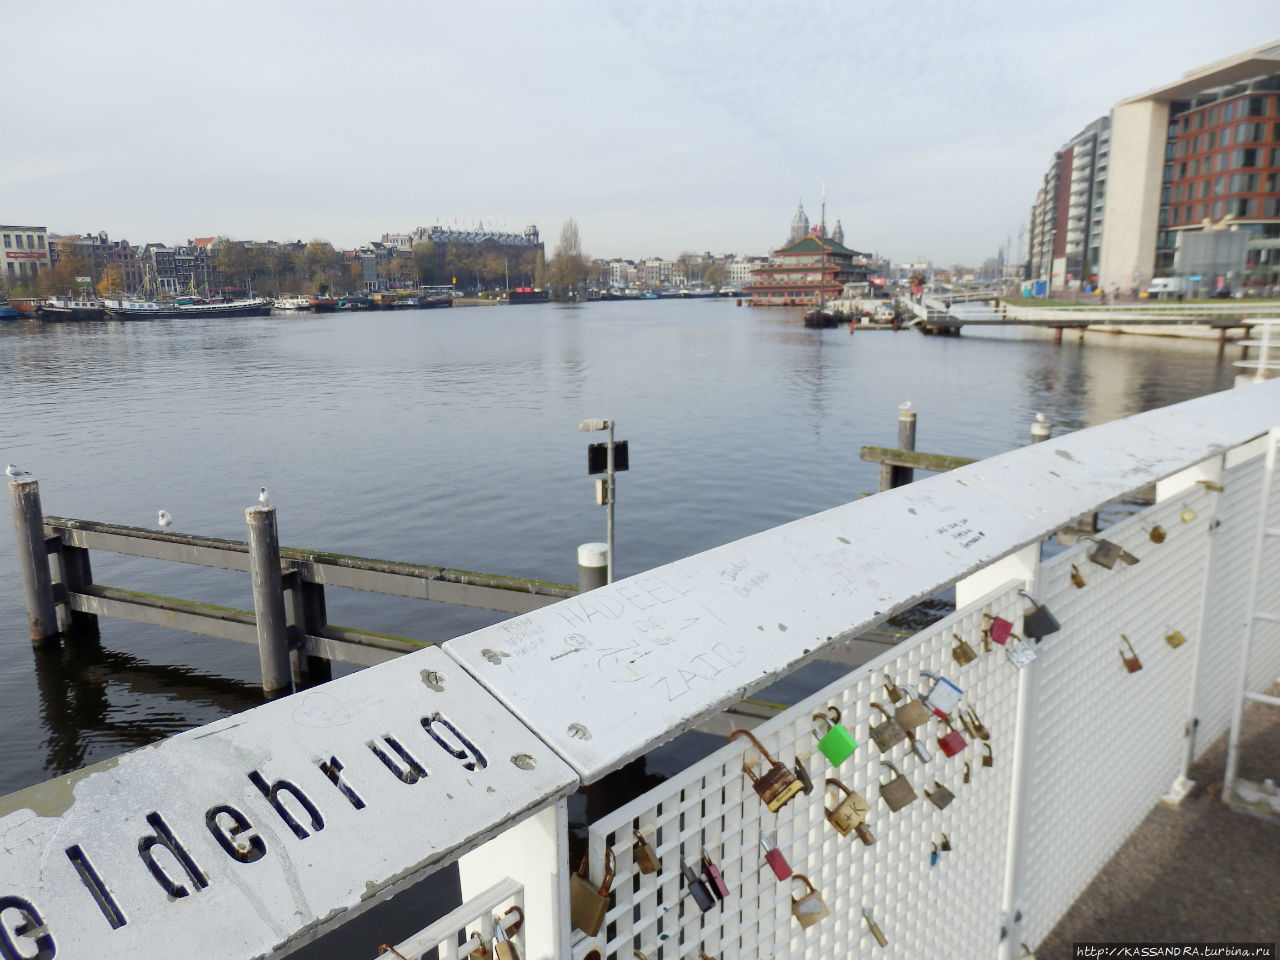 Ауде-Зёйде в Амстердаме. Корабли в моей гавани Амстердам, Нидерланды